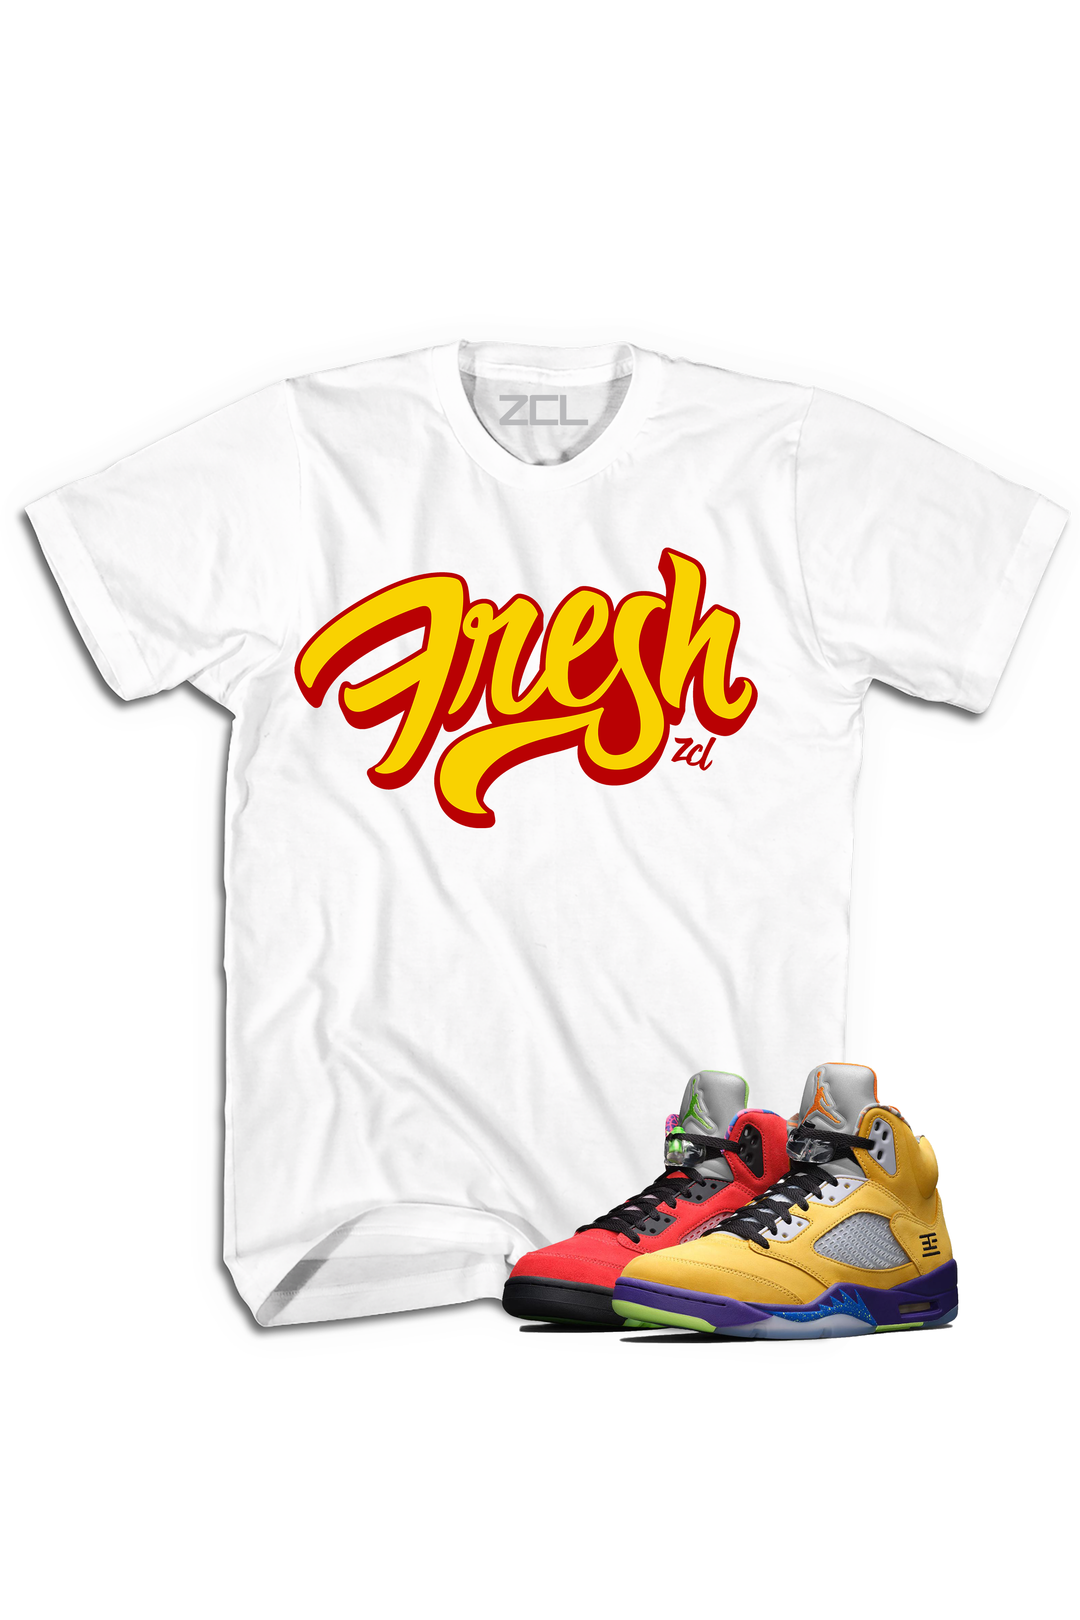 Air Jordan 5 "Fresh" Tee What The - Zamage